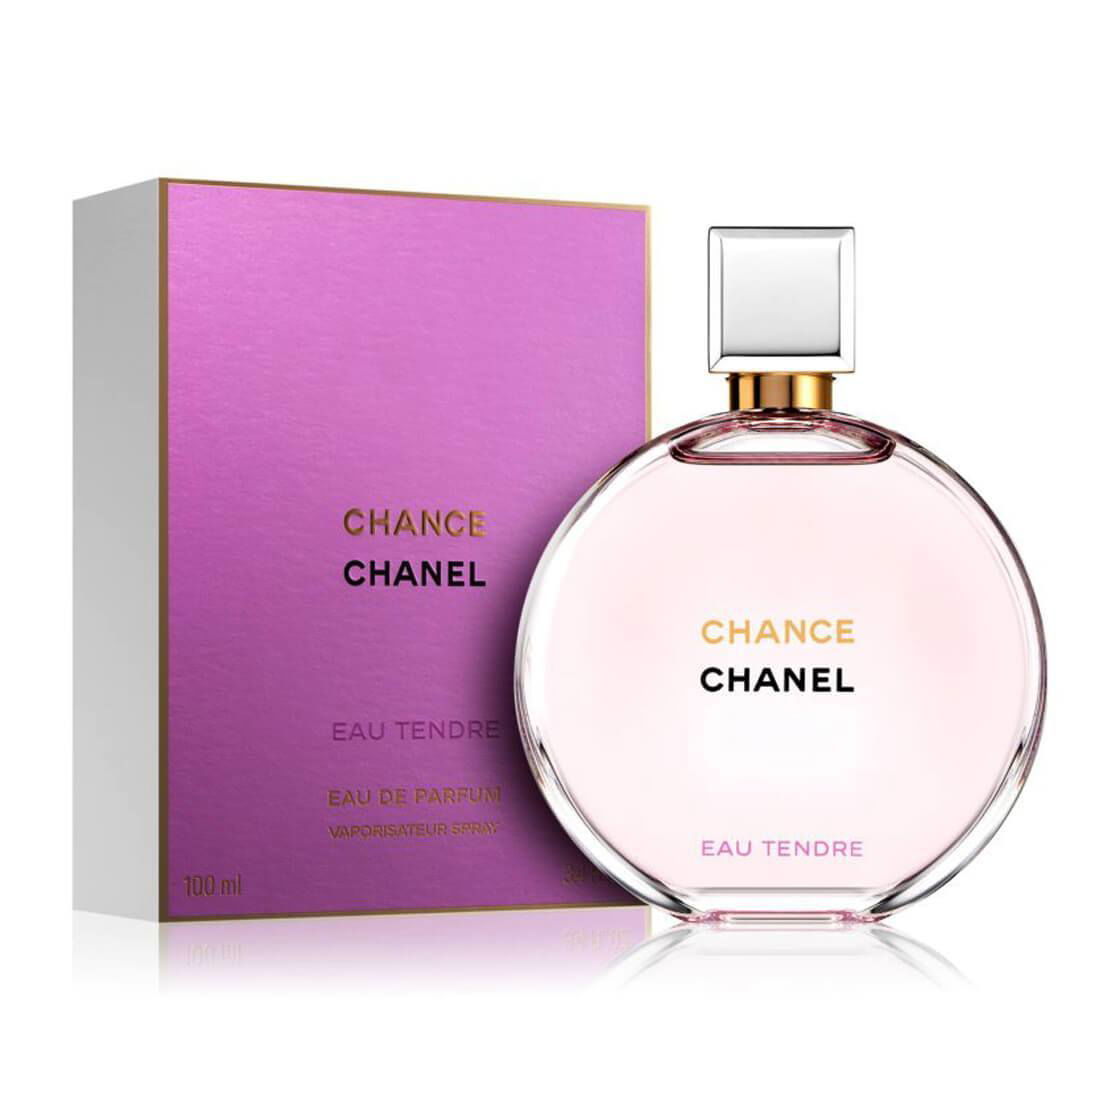 Chanel Chance Eau Tendre EDT 100 ml Kadın Parfümü kapak resmi